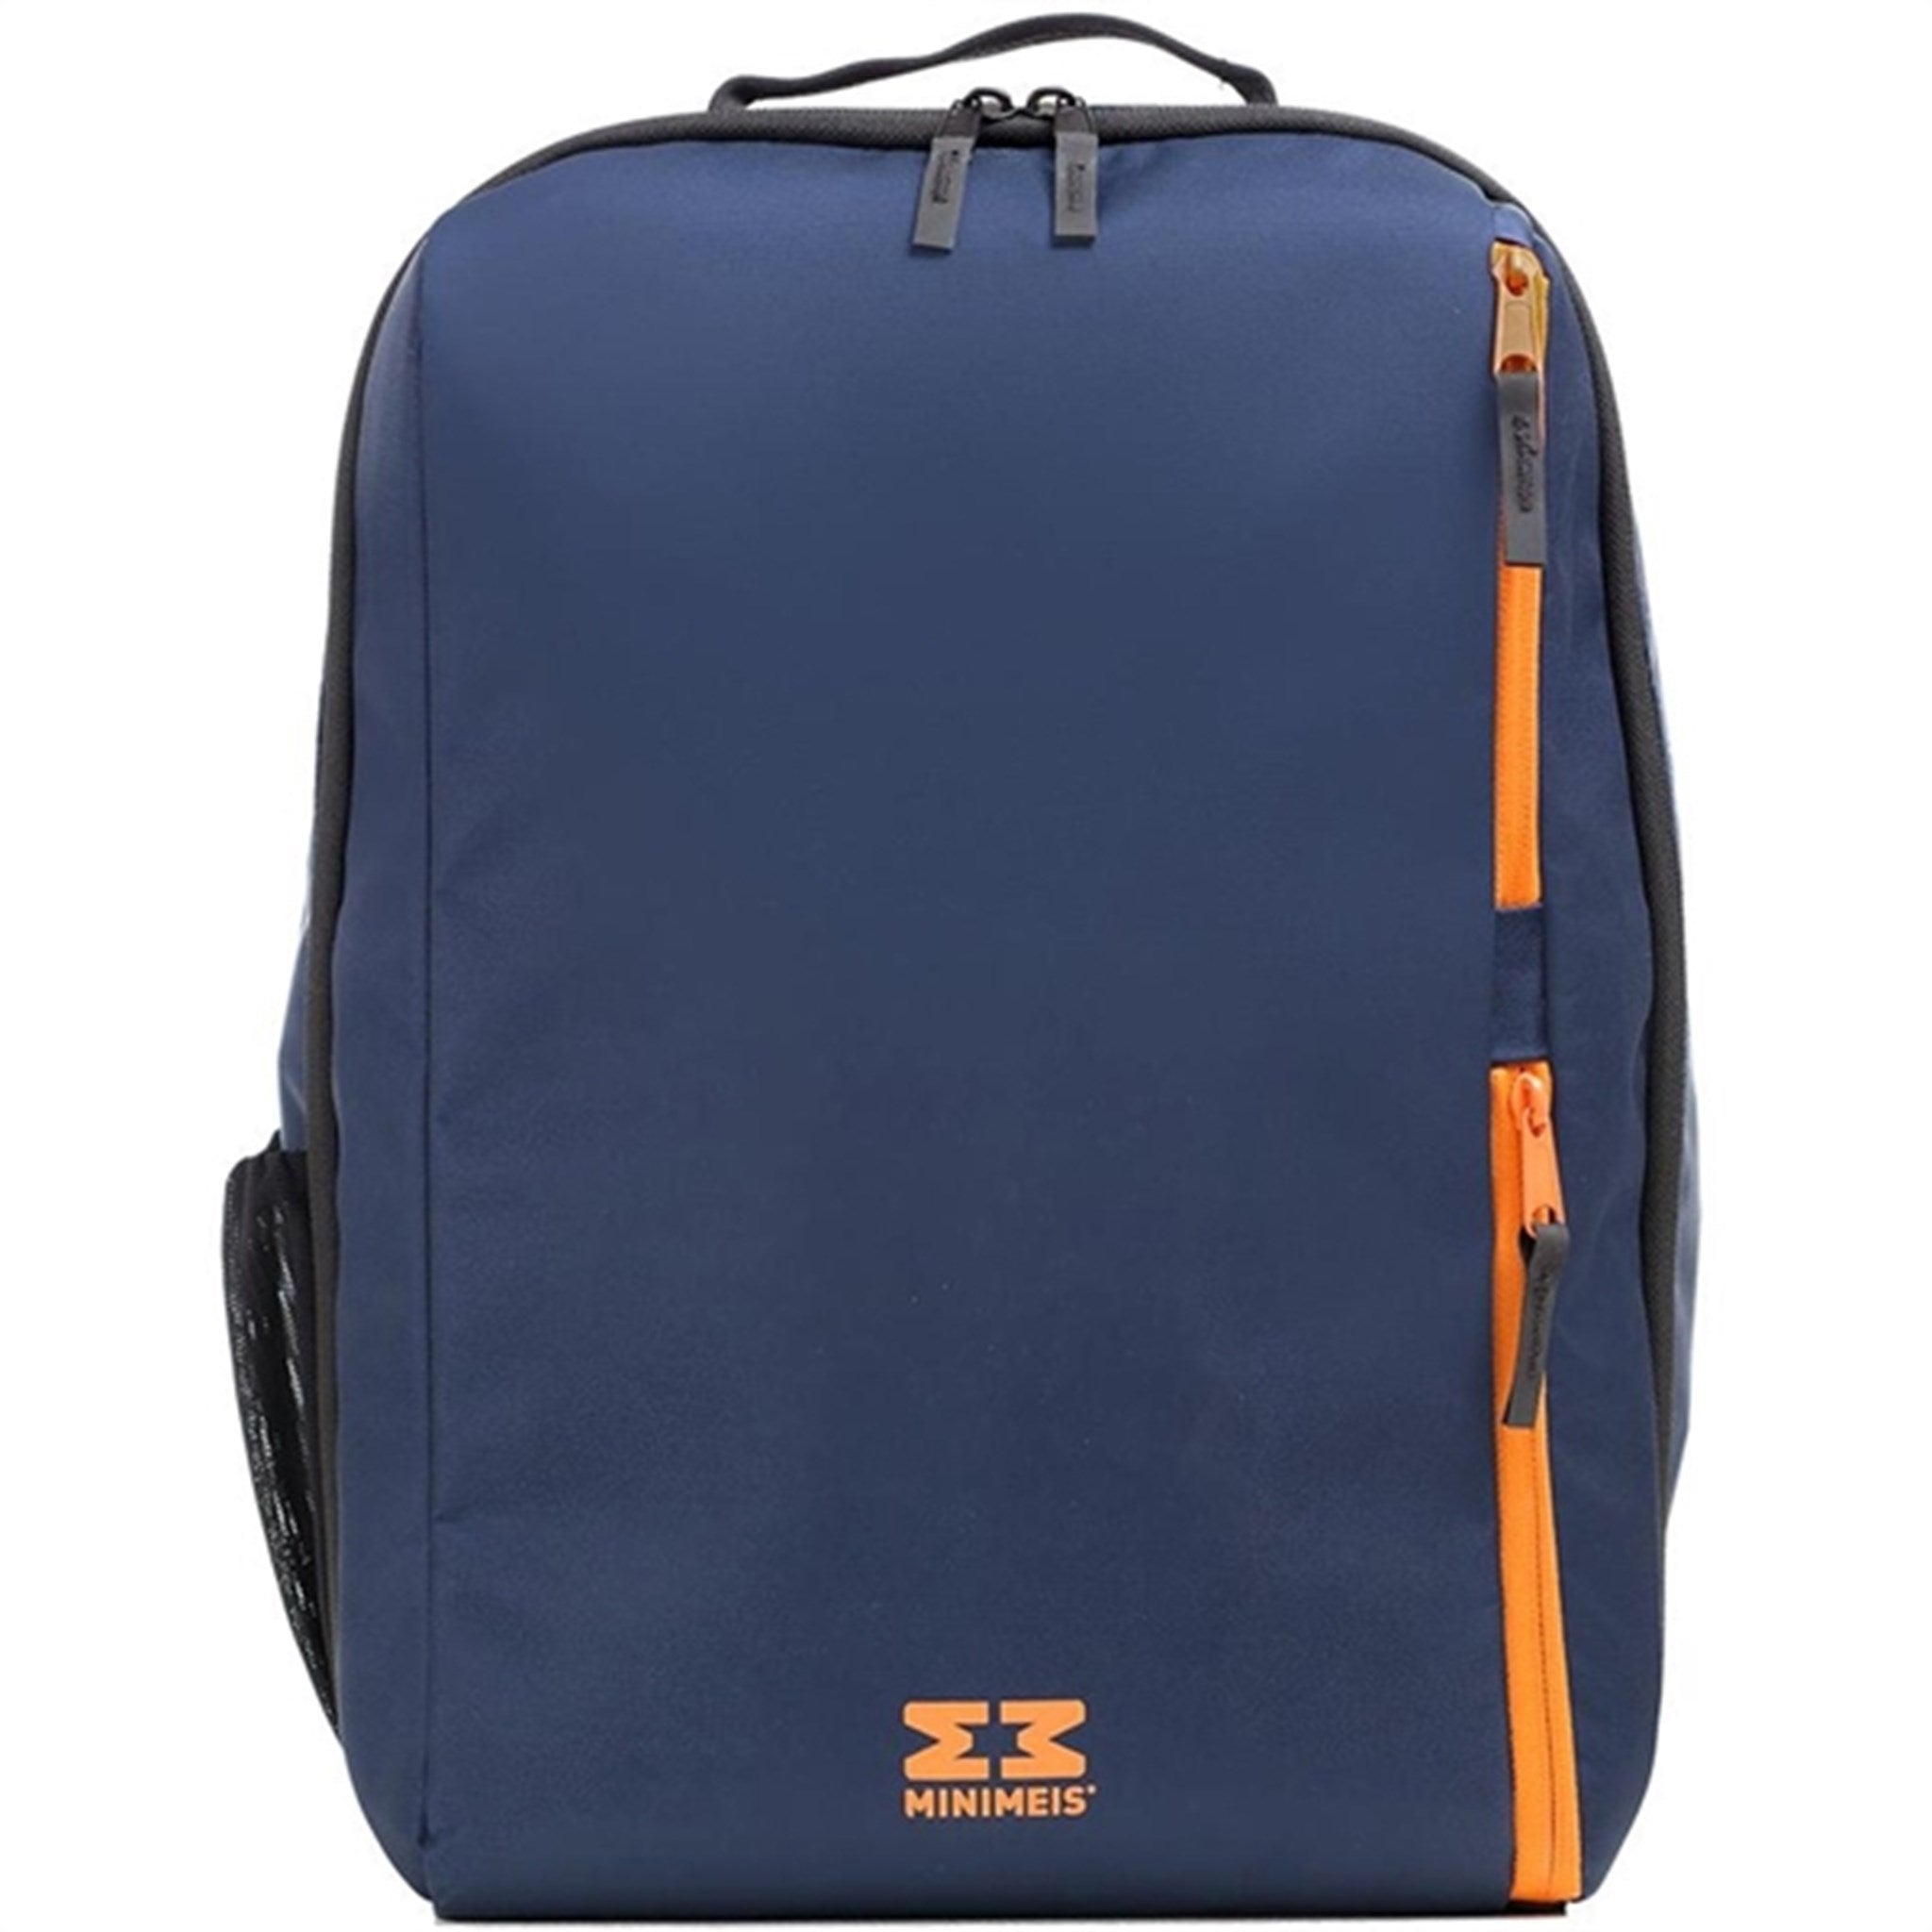 MiniMeis Backpack Navy Blue